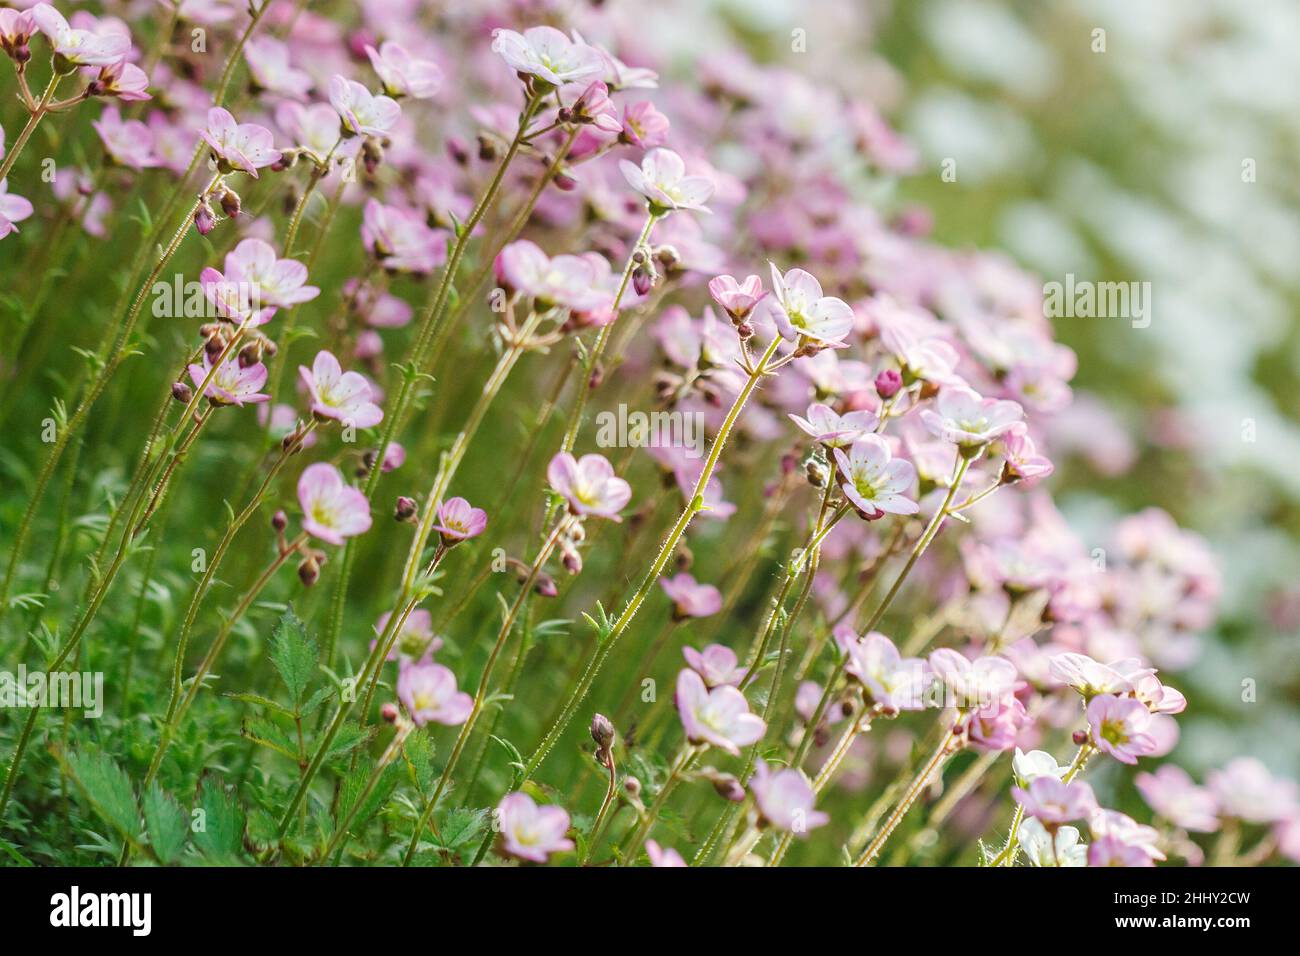 Saxifraga, the stone breaker flowers in the garden. Stock Photo